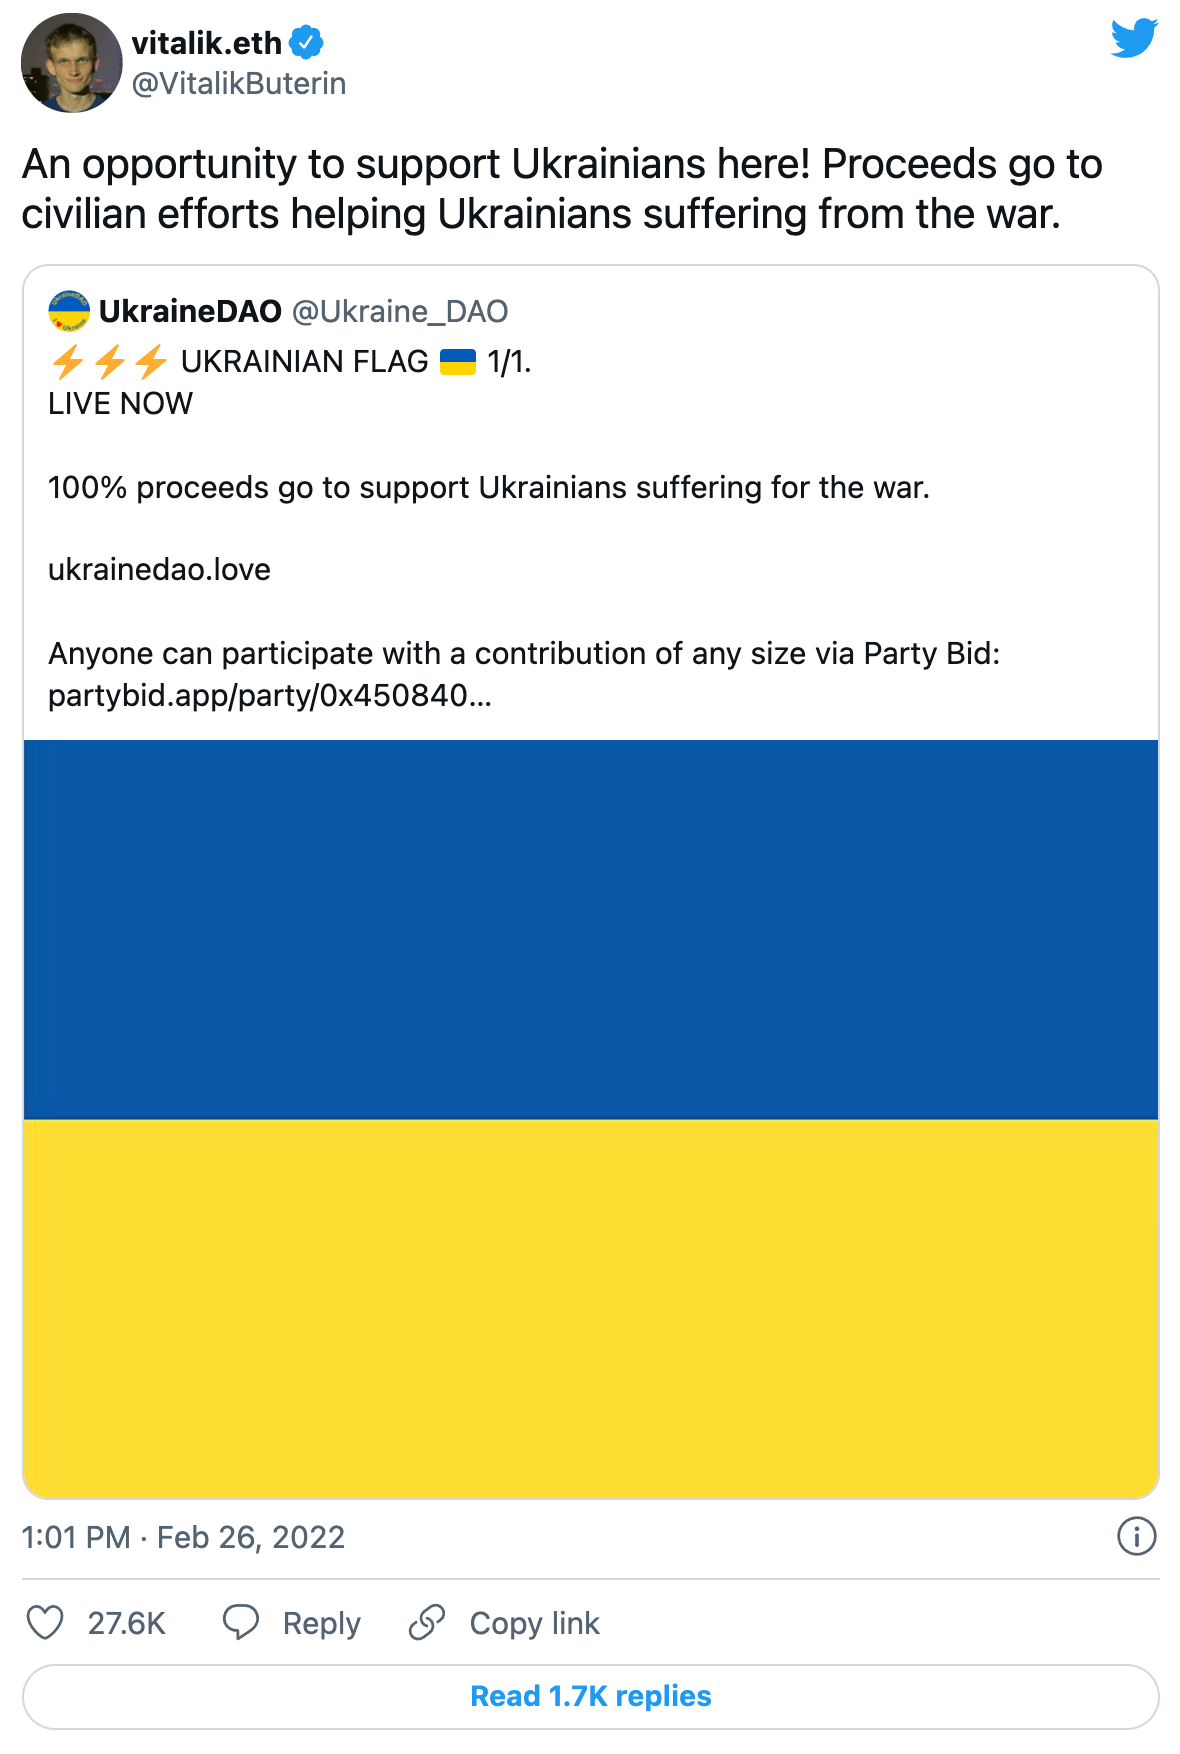 Vitalik promotes Ukraine support DAO